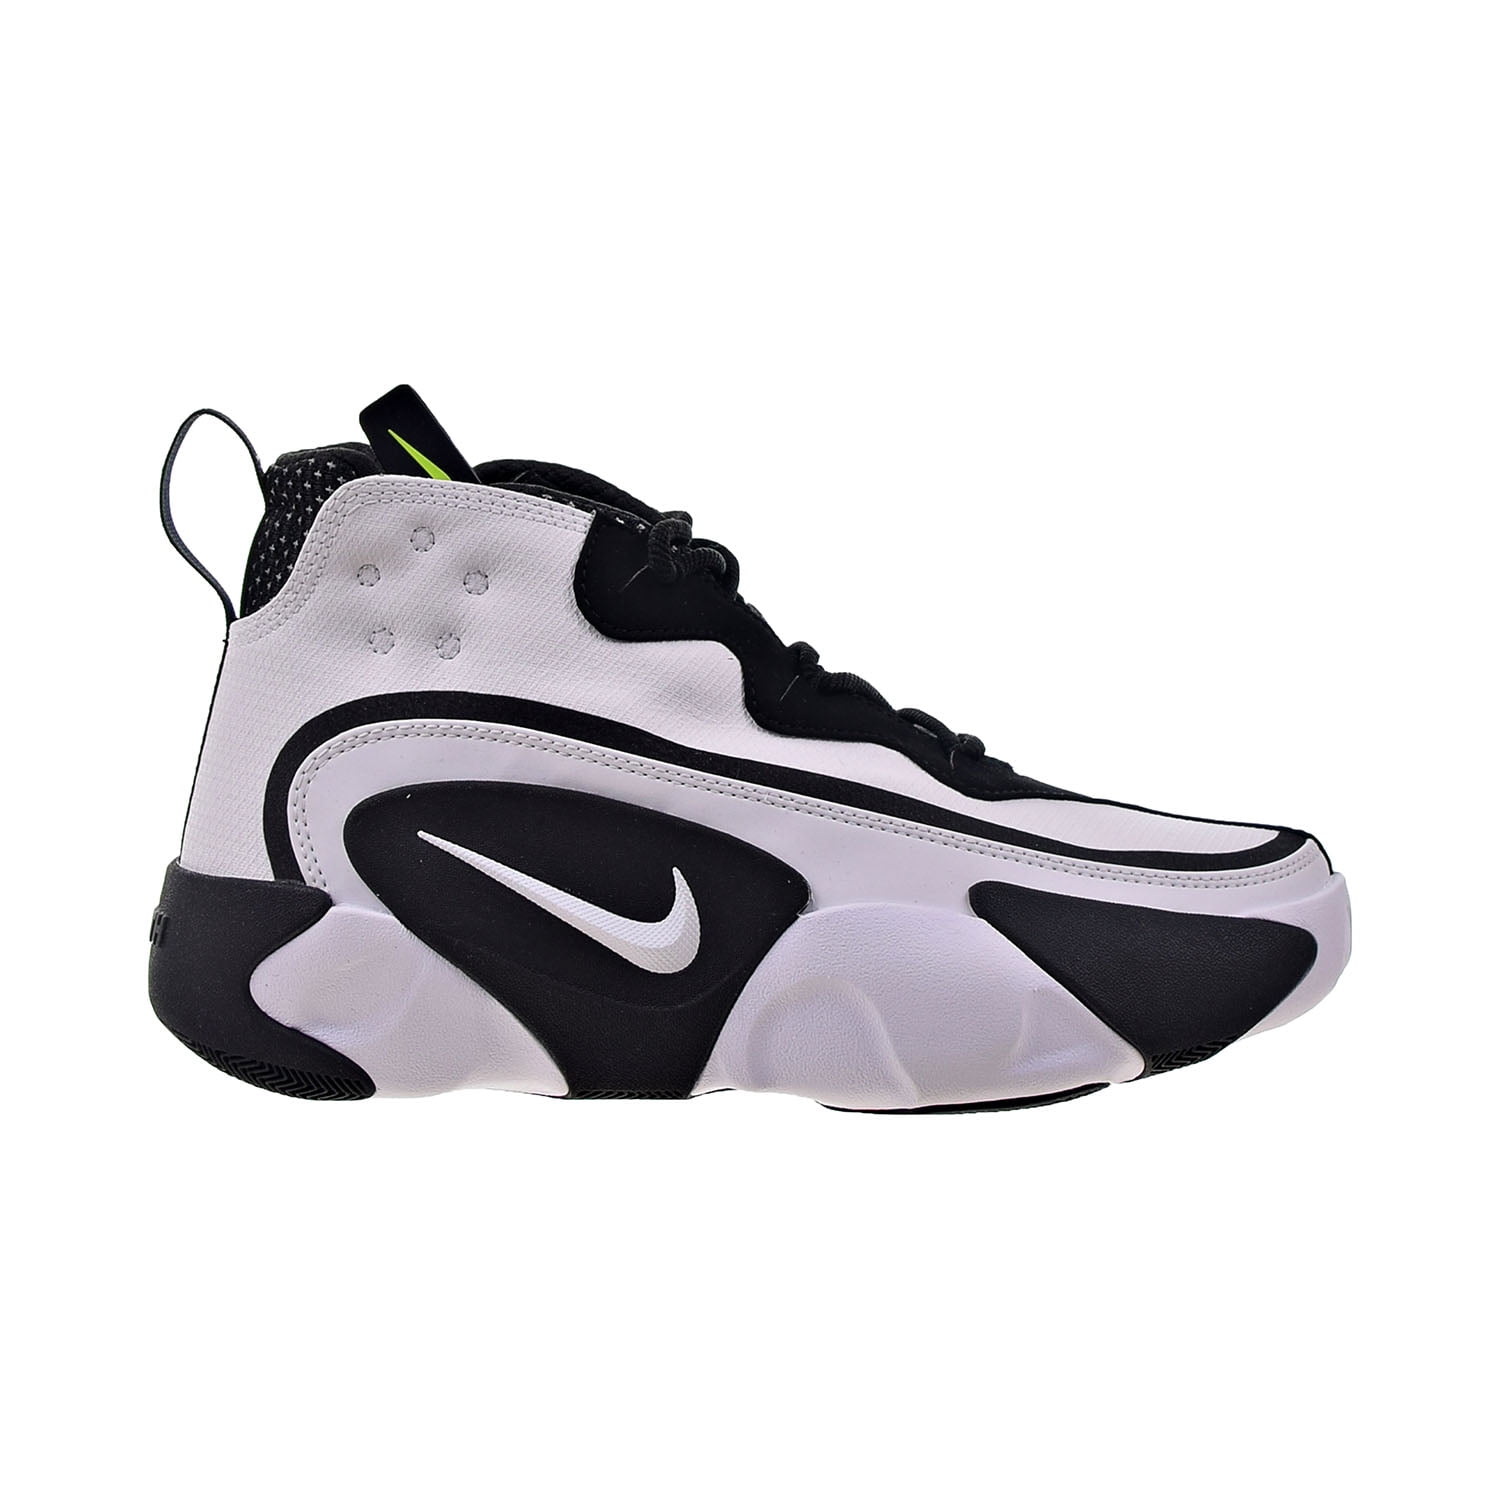 interval write Historian Nike React Frenzy Men's Shoes White-Black cn0842-100 - Walmart.com